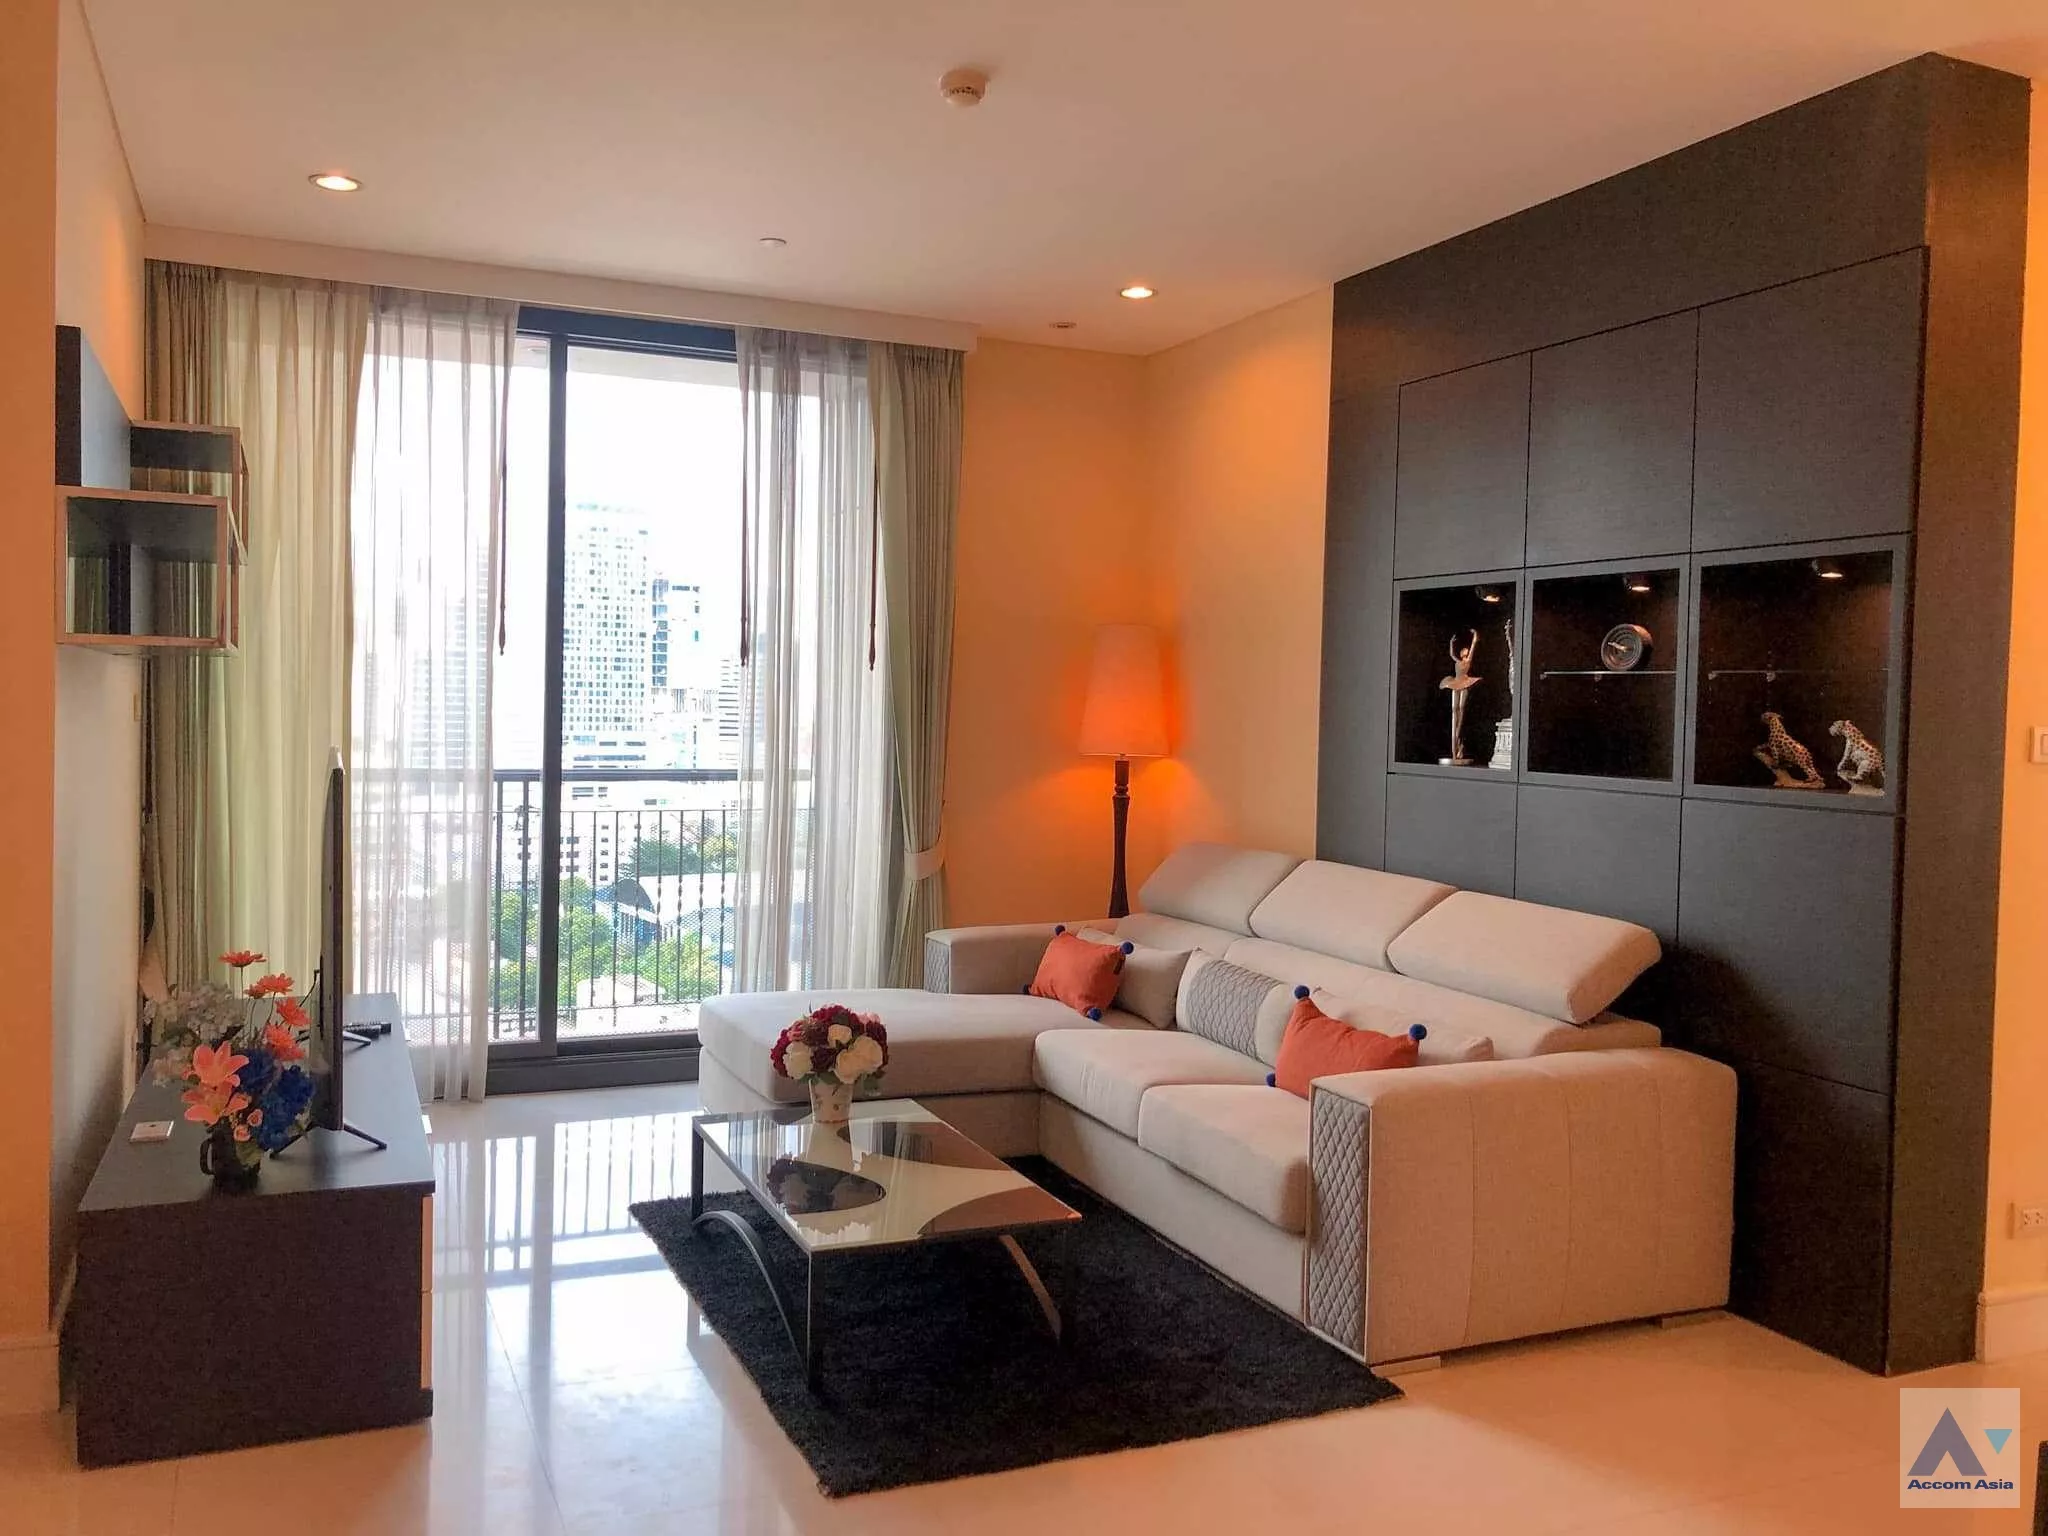 Pet friendly |  Aguston Sukhumvit 22 Condominium  2 Bedroom for Rent BTS Phrom Phong in Sukhumvit Bangkok